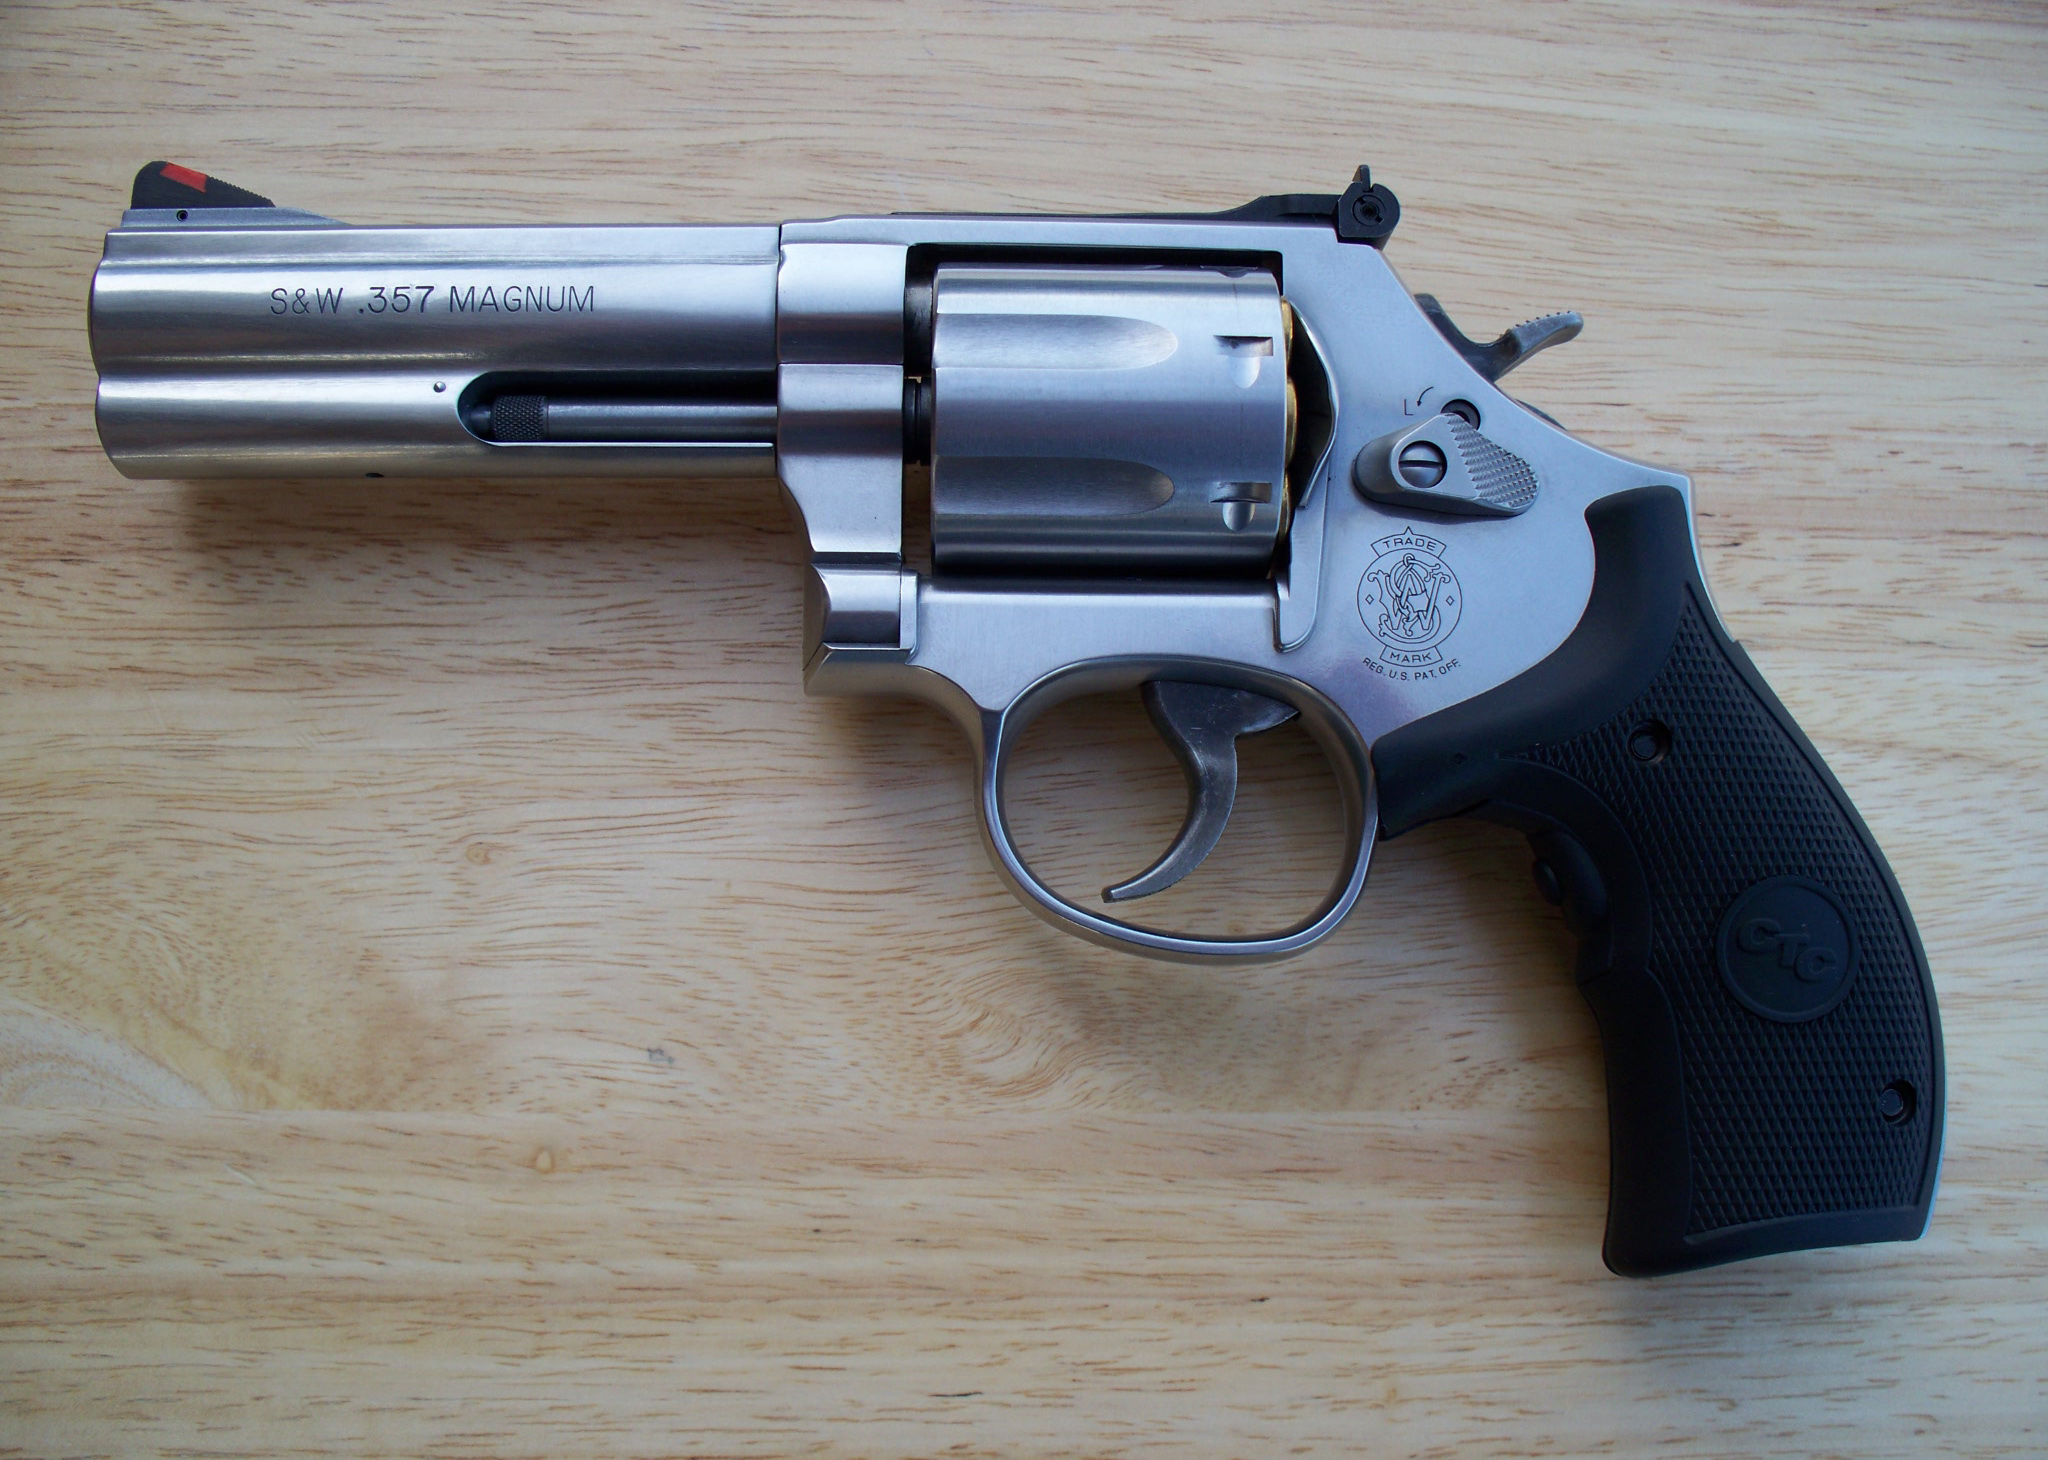 Smith & Wesson model 686 [online]. źródło: https://en.wikipedia.org/wiki/Smith_%26_Wesson_Model_686